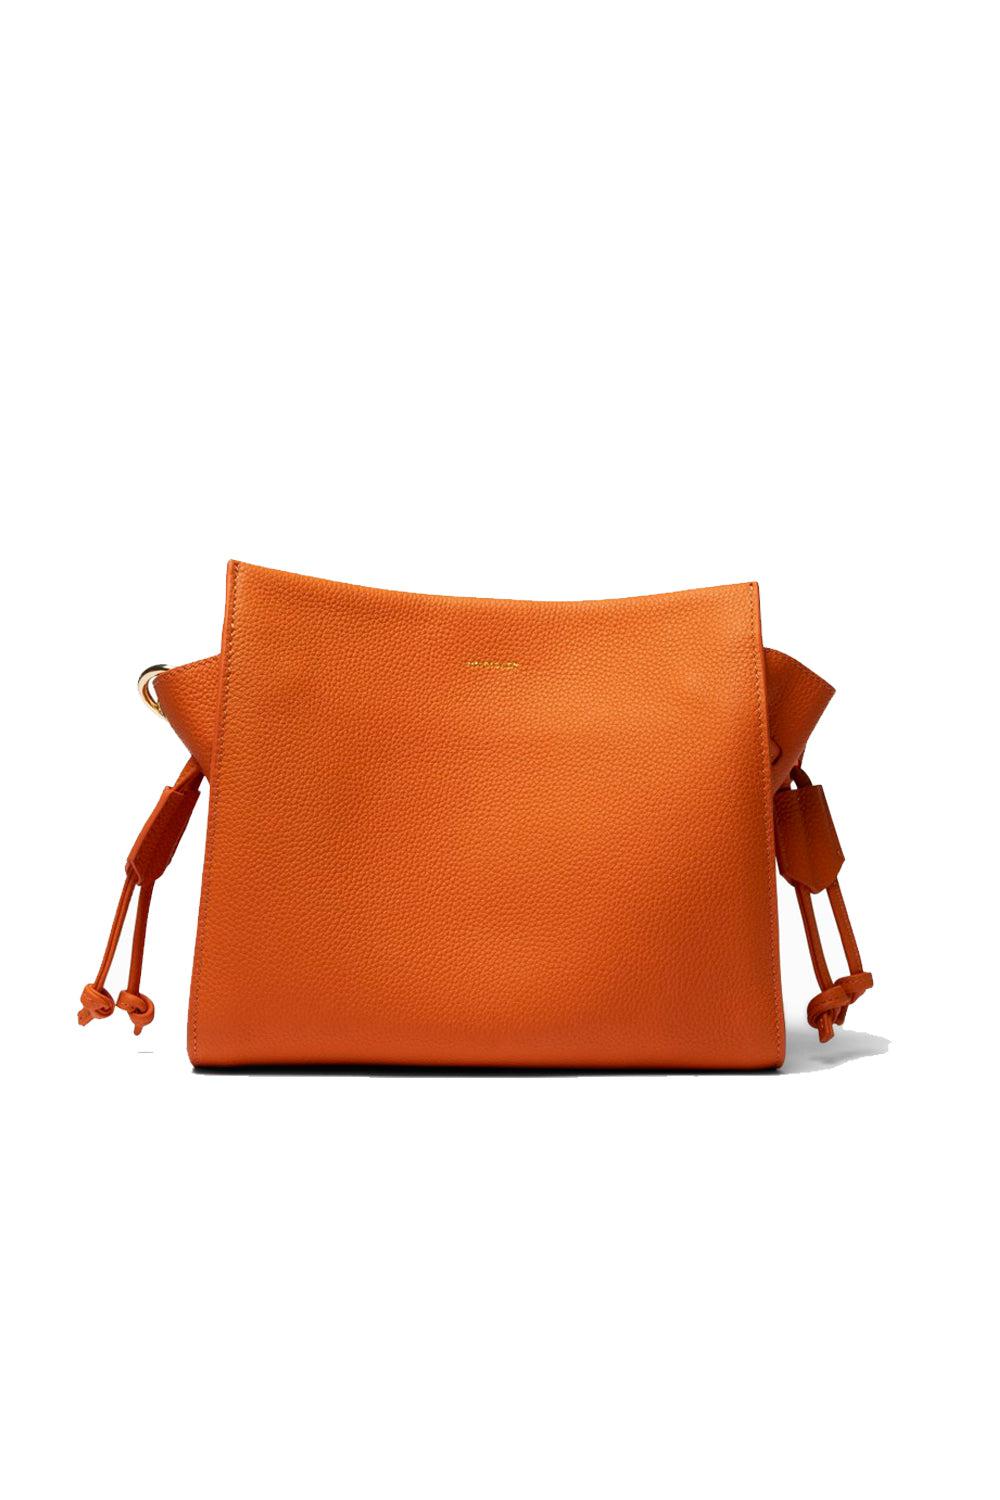 Bonnie-Small-Grained-Leather-Orange